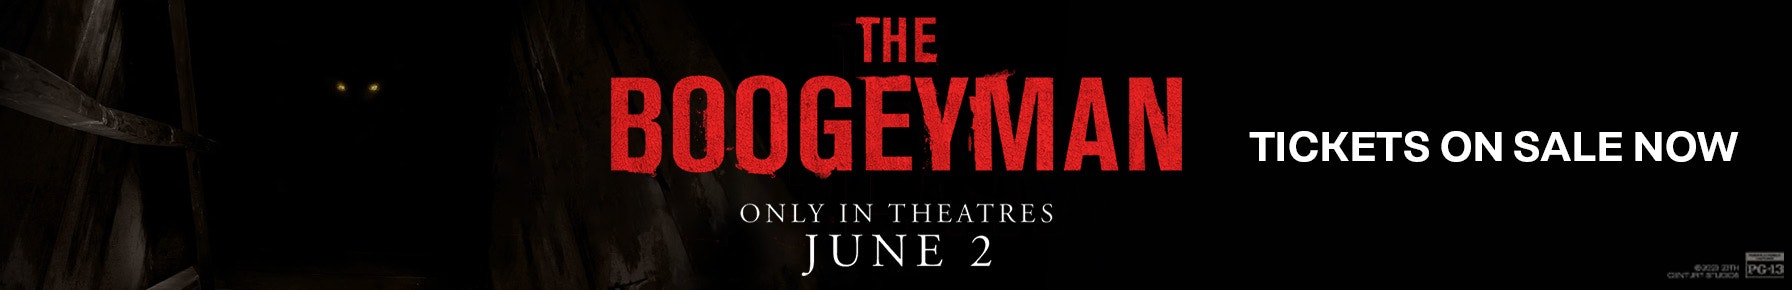 boogeyman-harkins-theatre-image